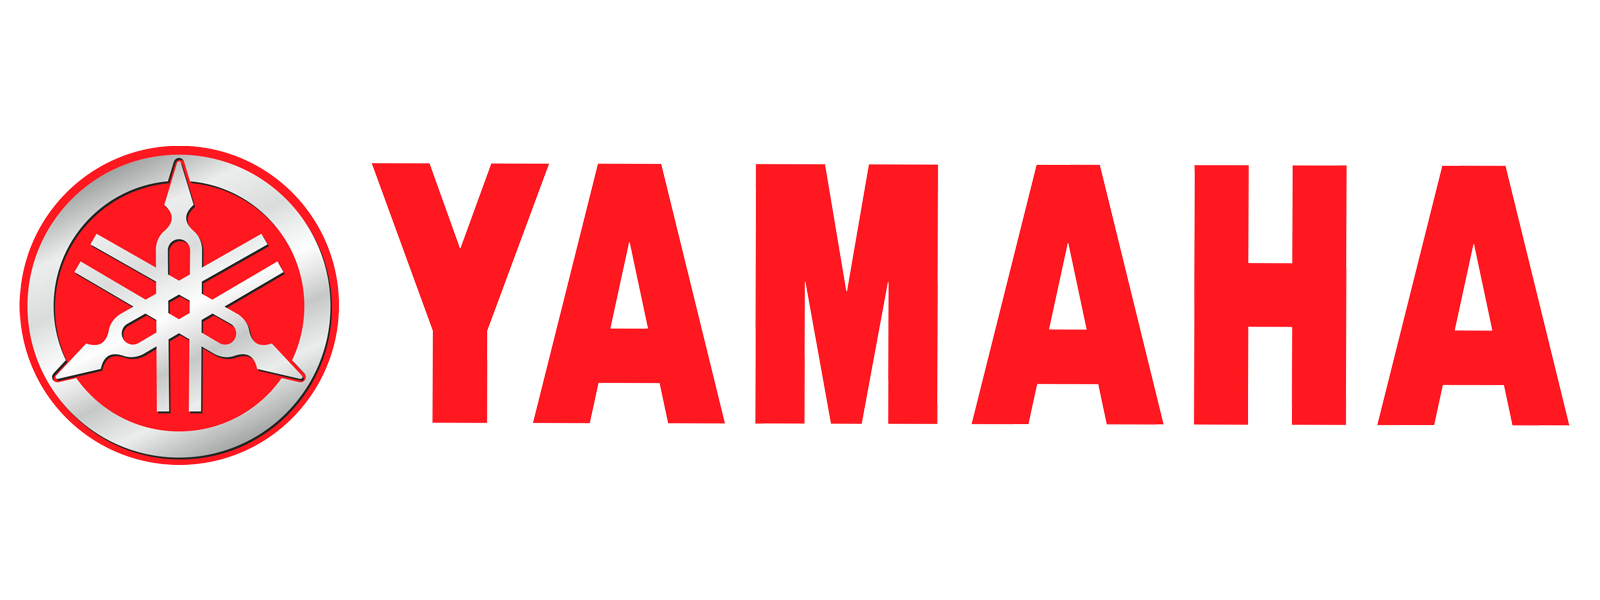 kisspng yamaha motor company yamaha corporation bmw motorc yamaha 5ac5fd1e572db7.7727304915229248303571 - bravoboats